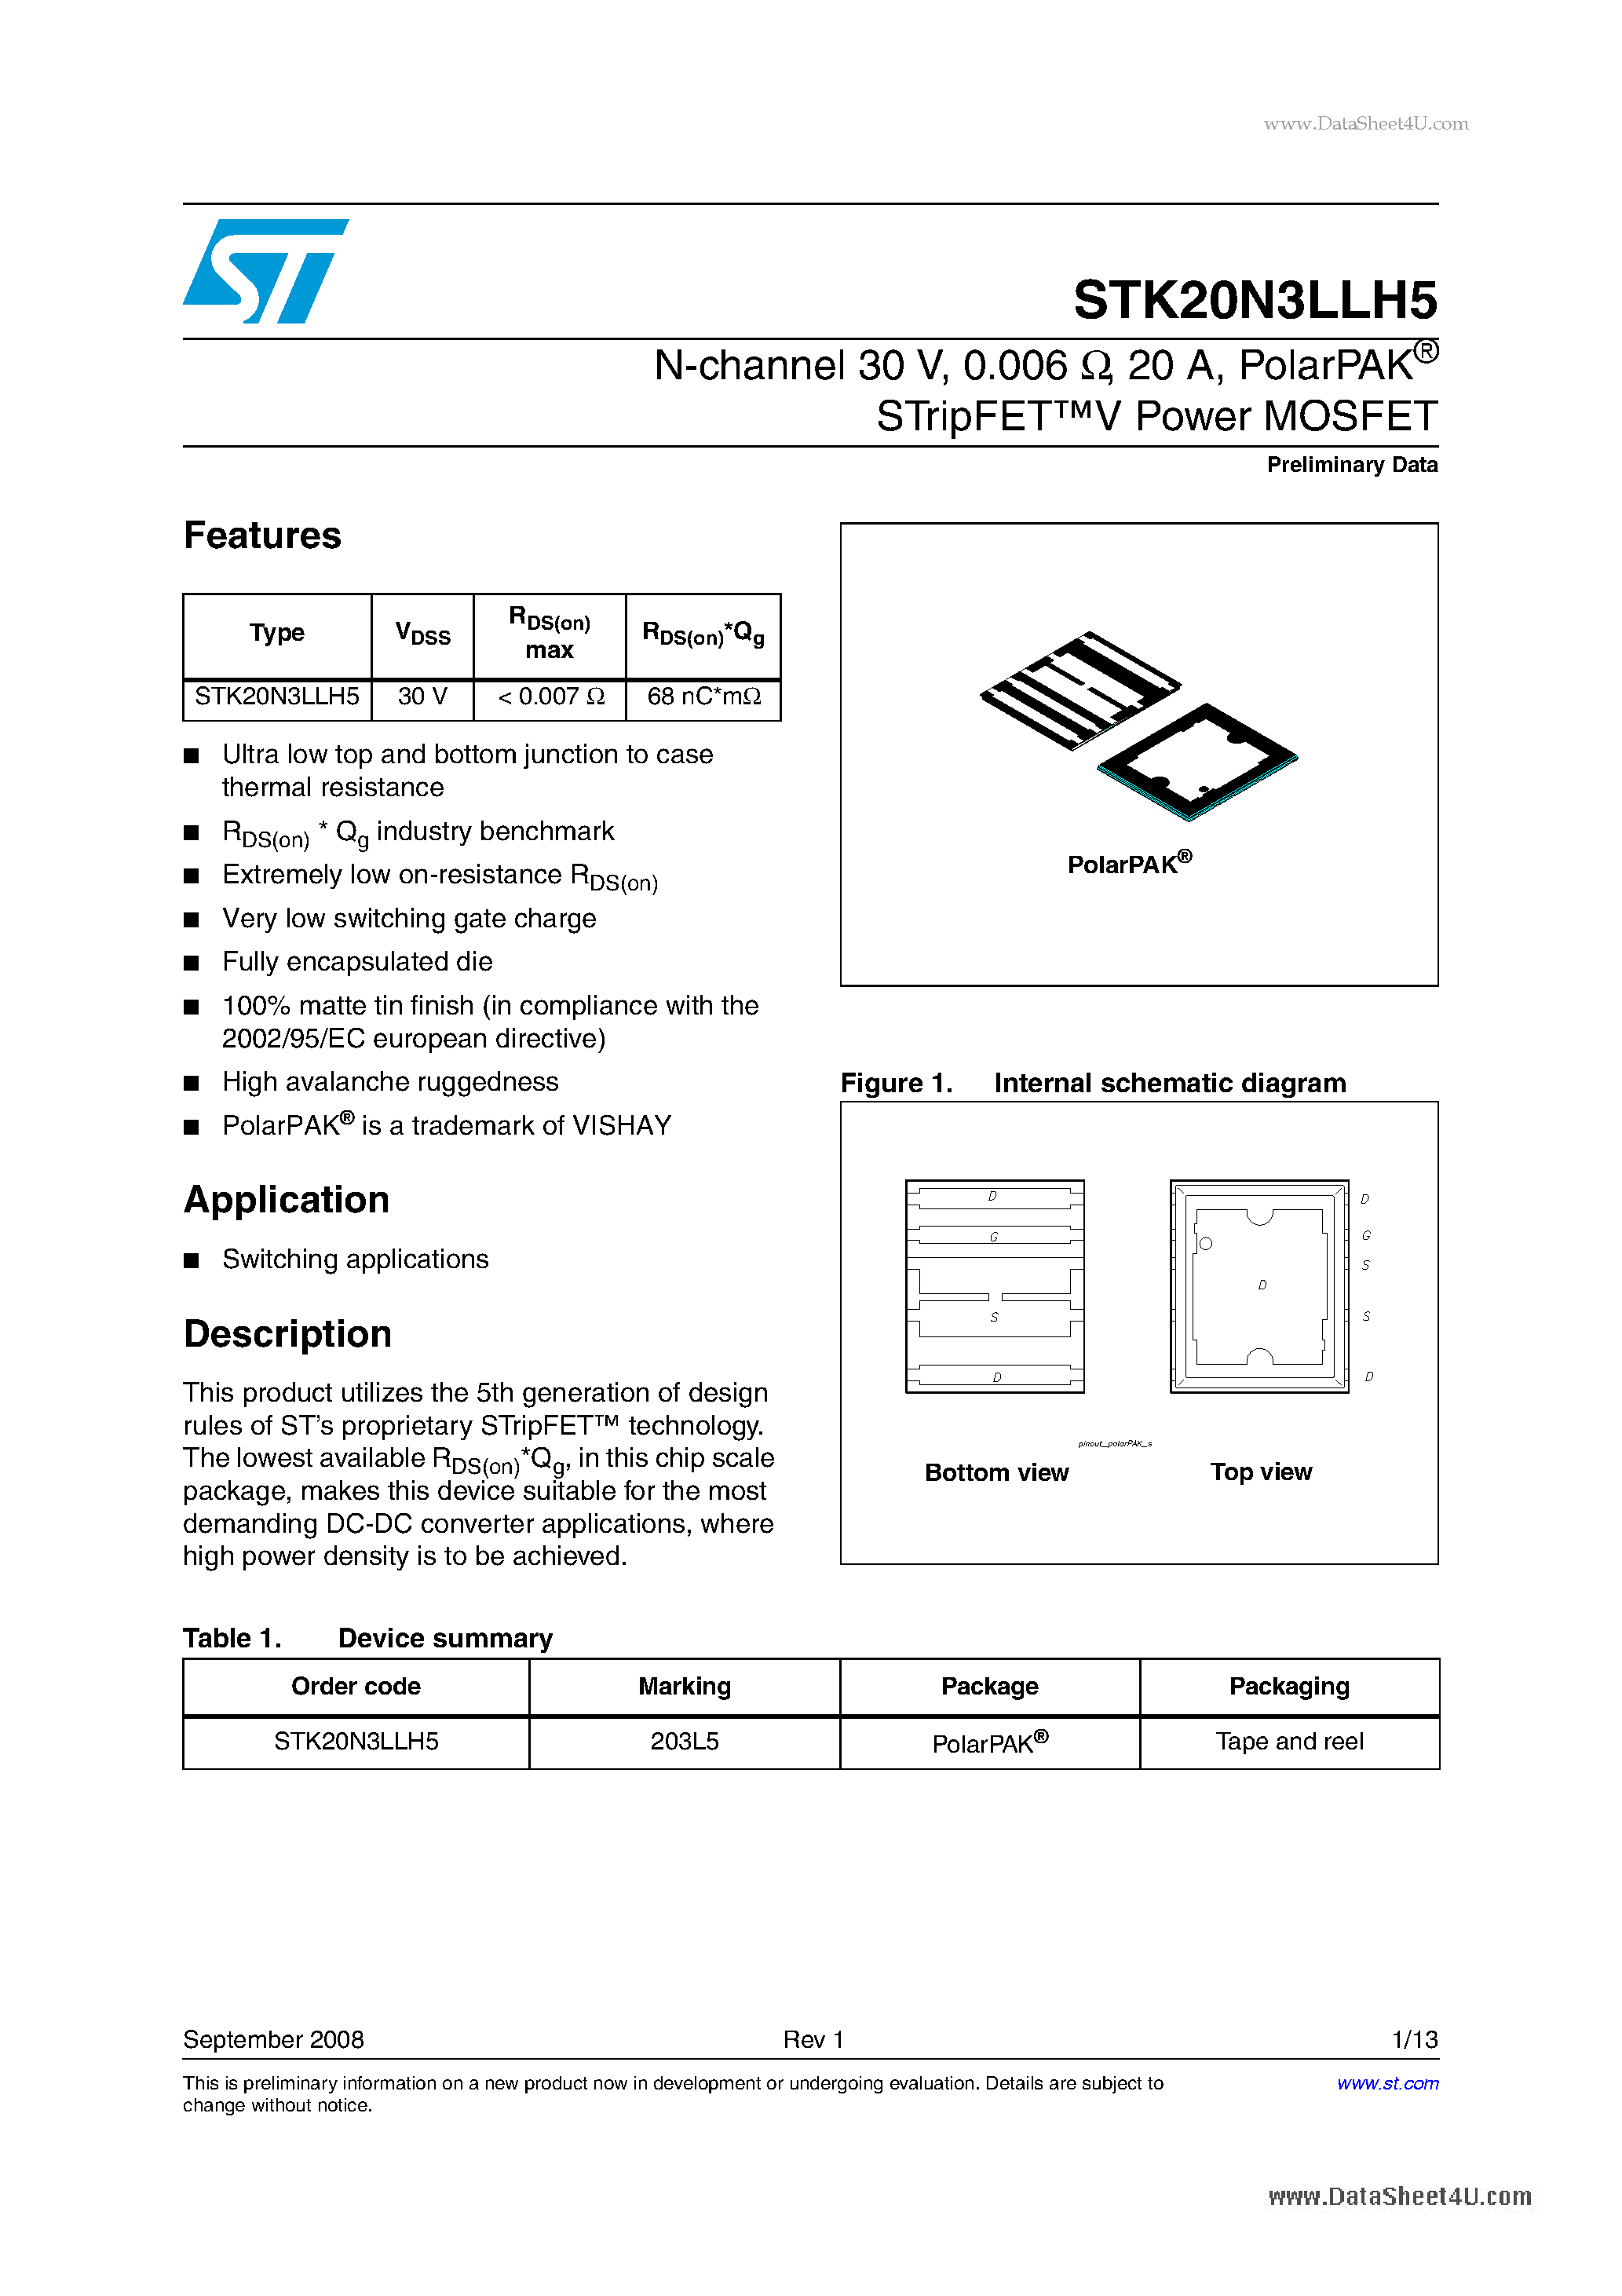 Datasheet STK20N3LLH5 - N-channel Power MOSFET page 1